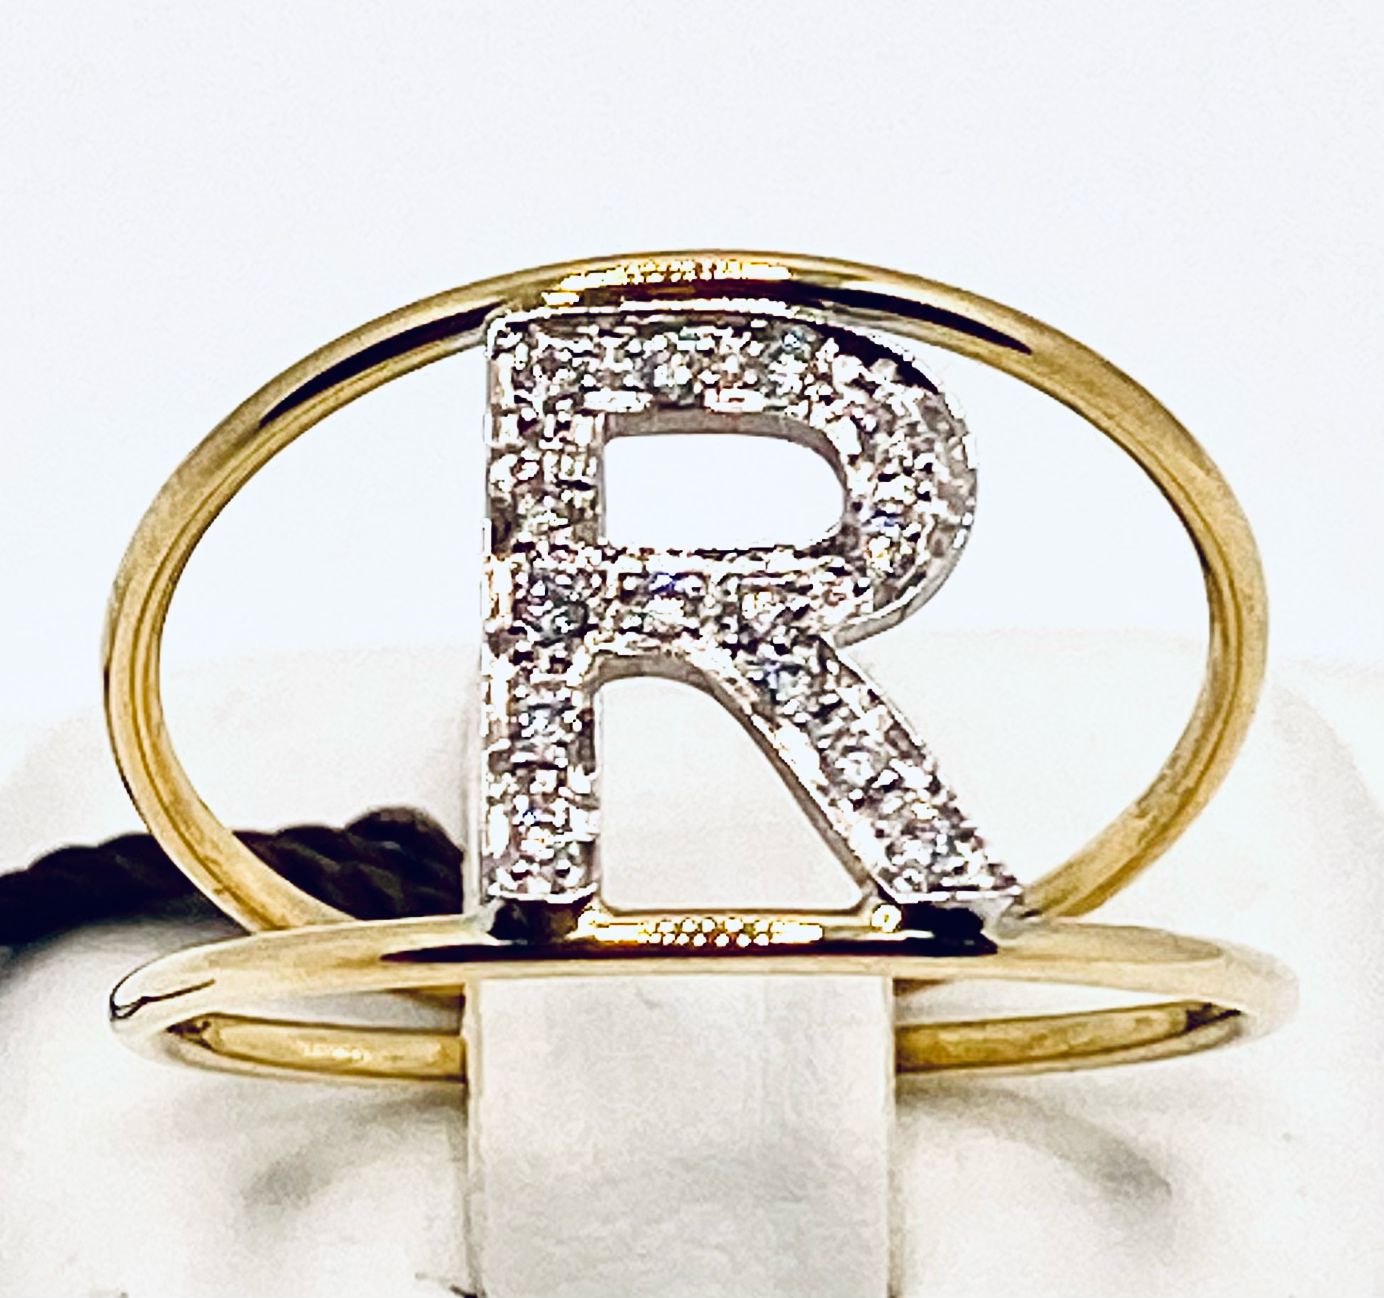 AN-R art initial ring